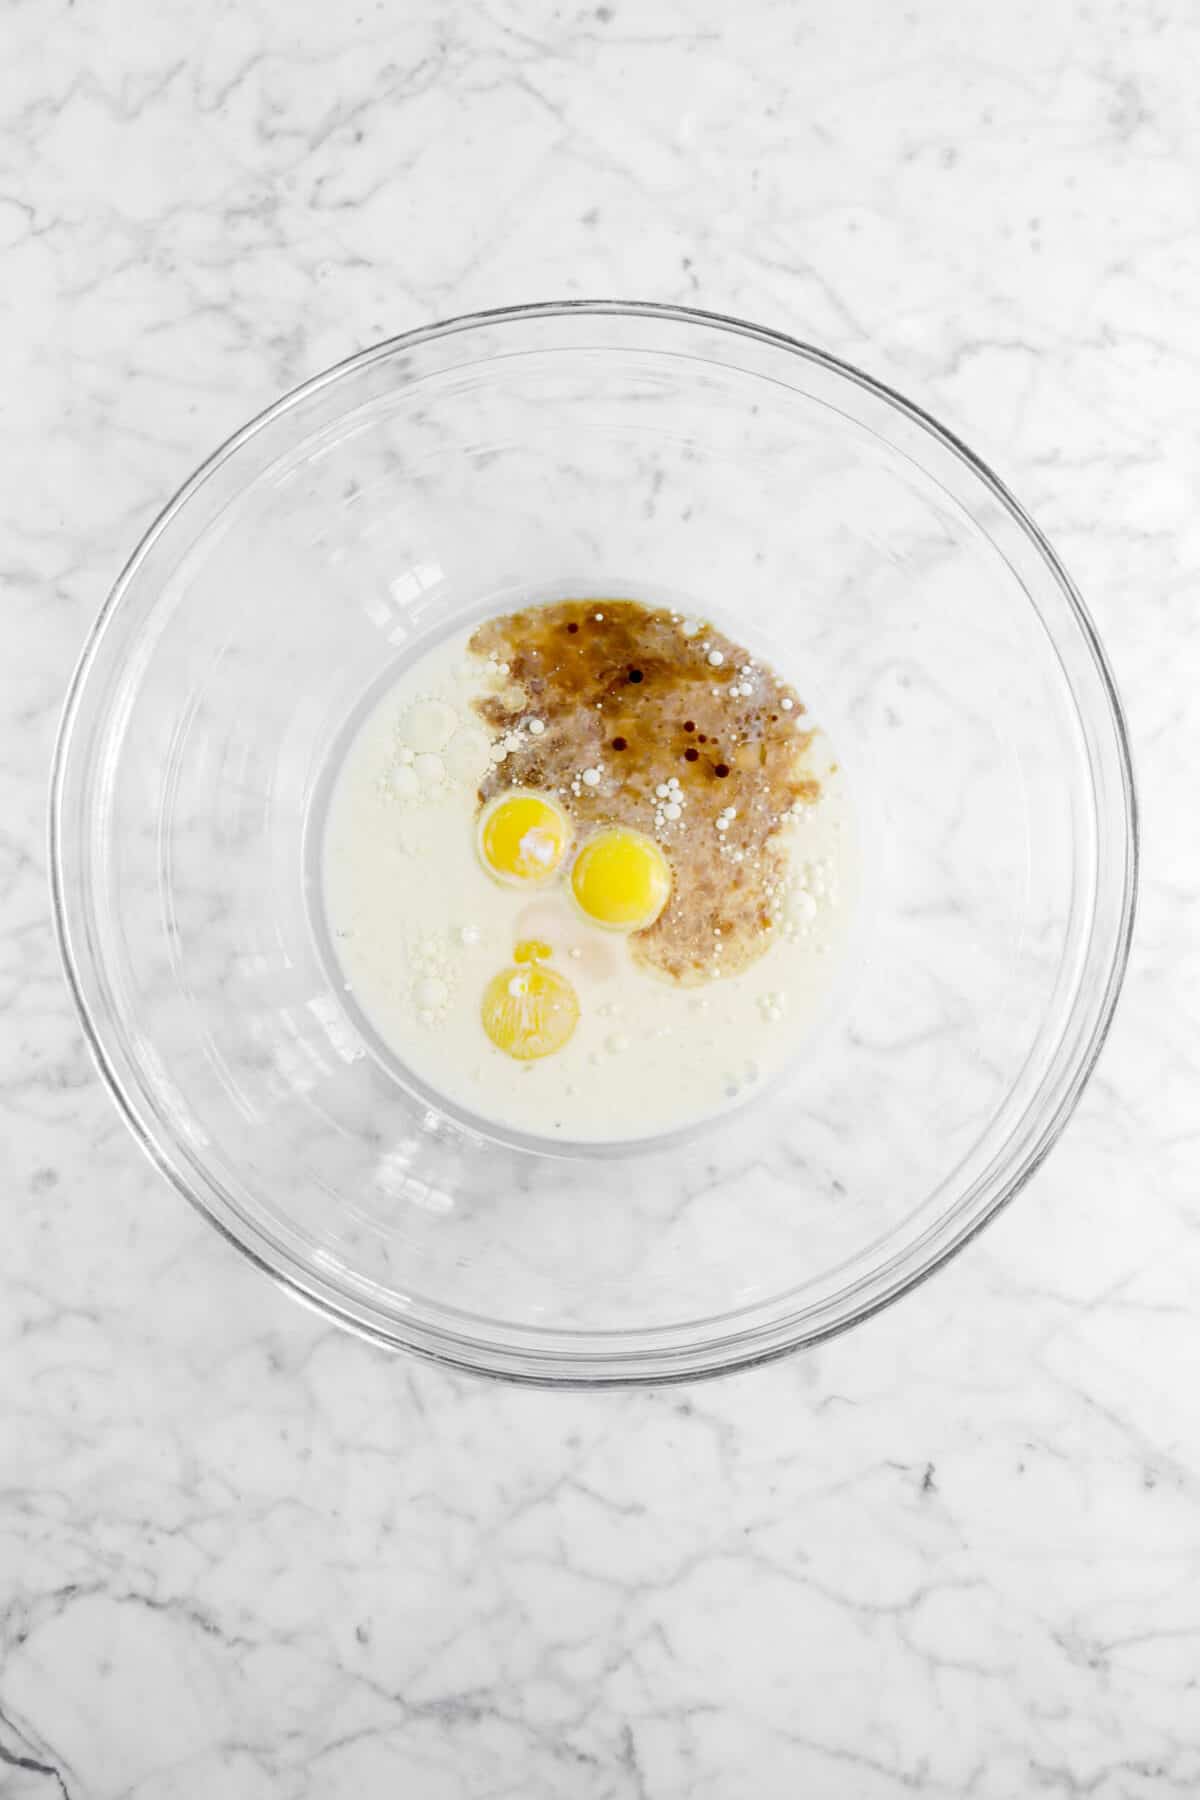 vanilla, egg yolks, oil, and milk in glass bowl